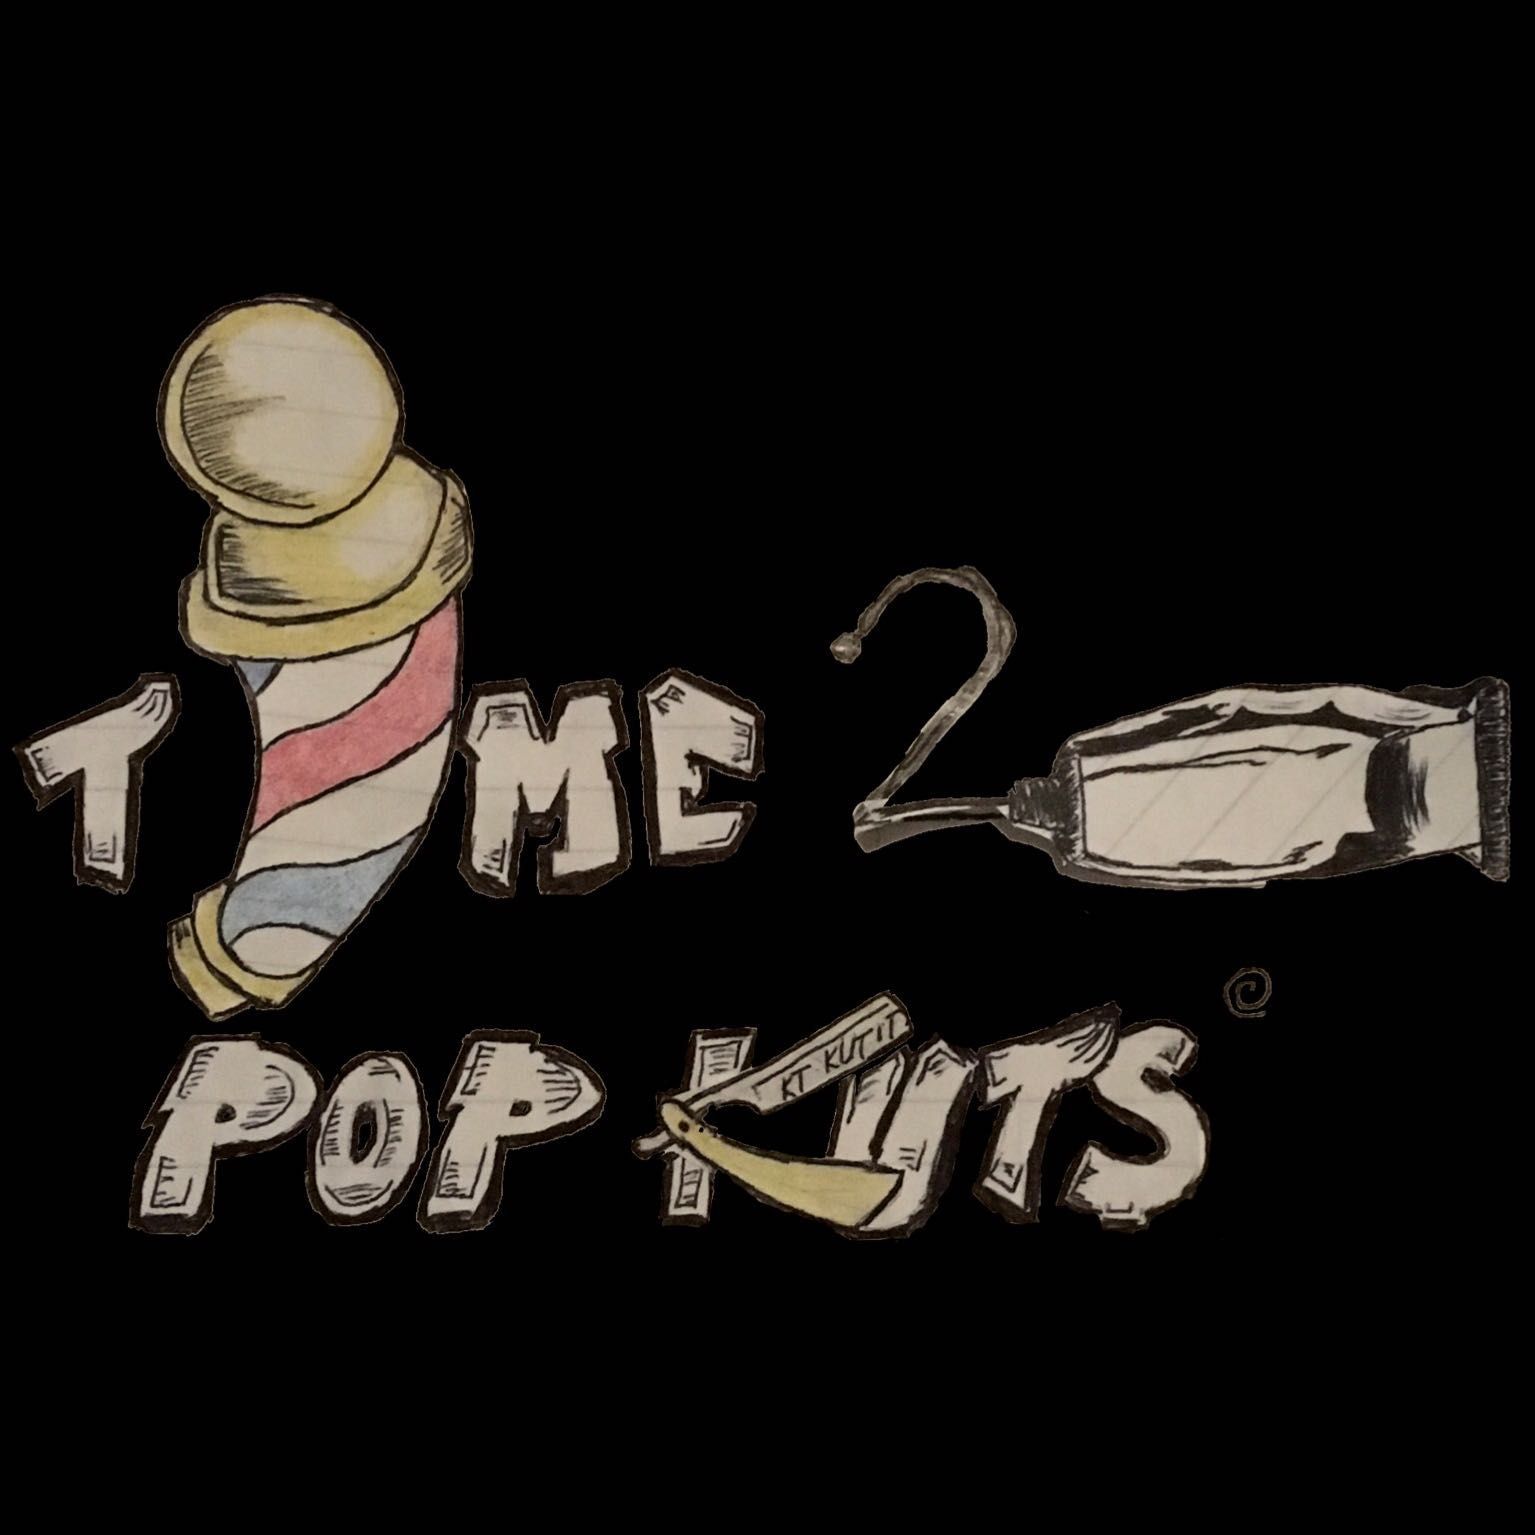 Time 2 Pop Kuts, 1424 Jupiter Rd, #201, Plano, 75074